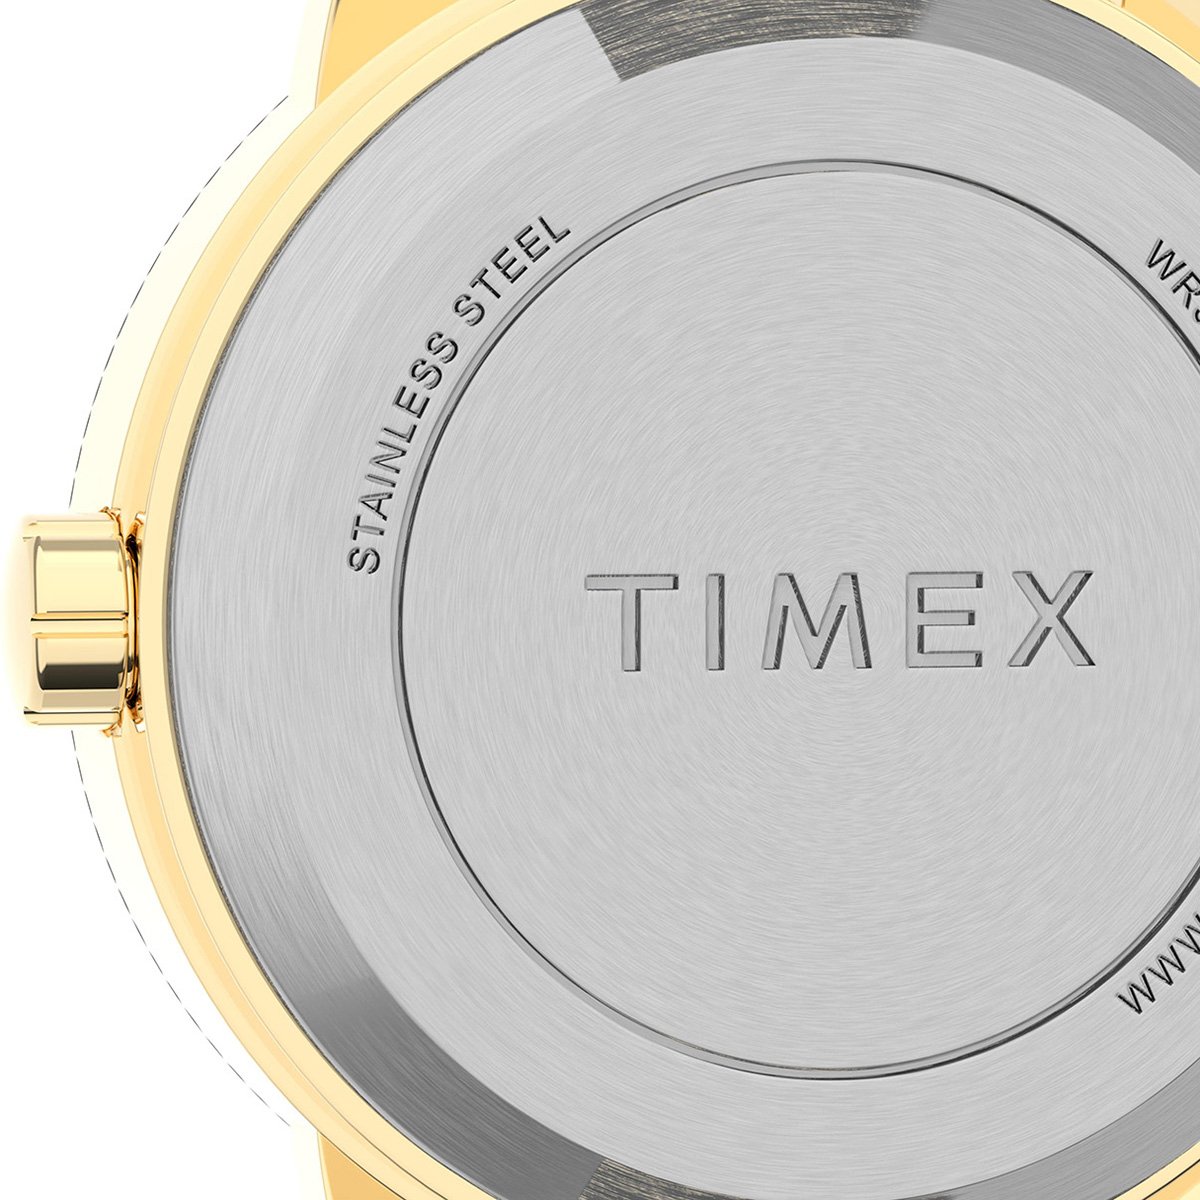 Reloj Dorado para Mujer Timex